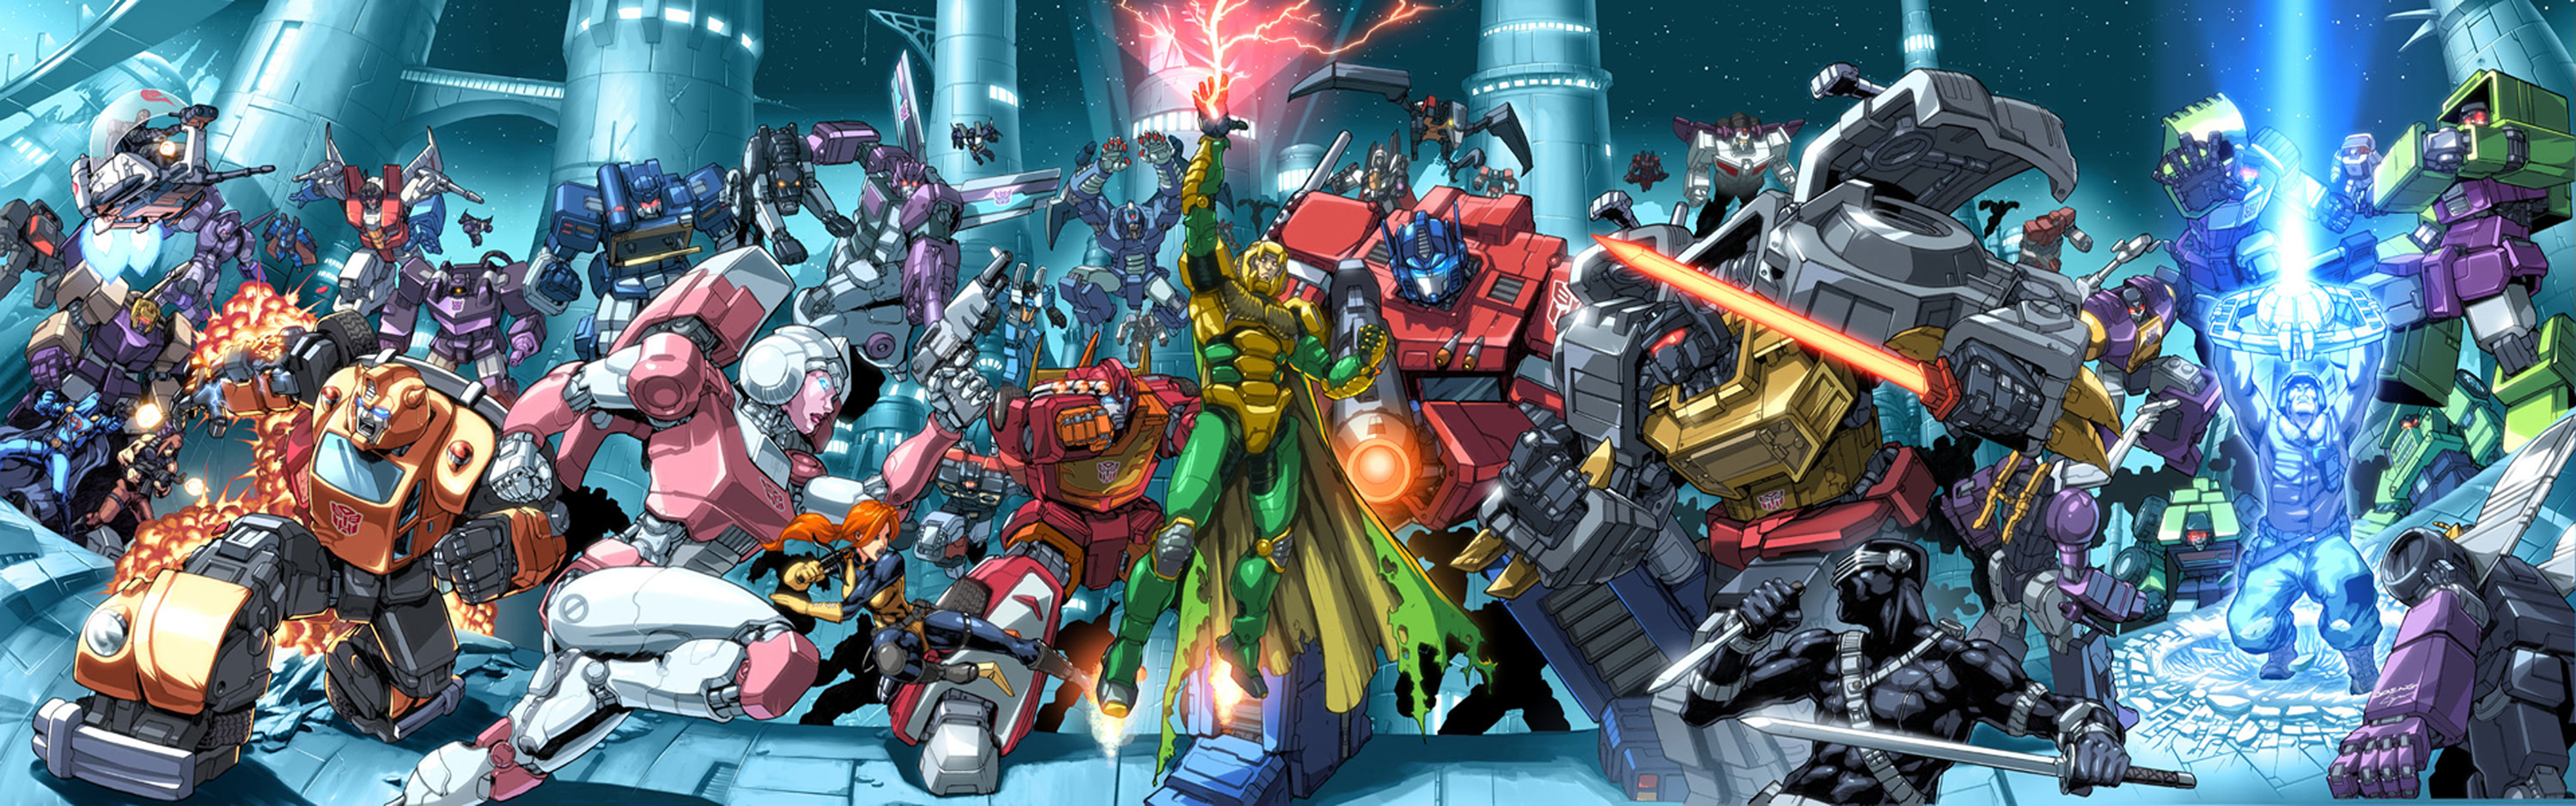  GI Joe vs Transformers Comics superhero weapons wallpaper background